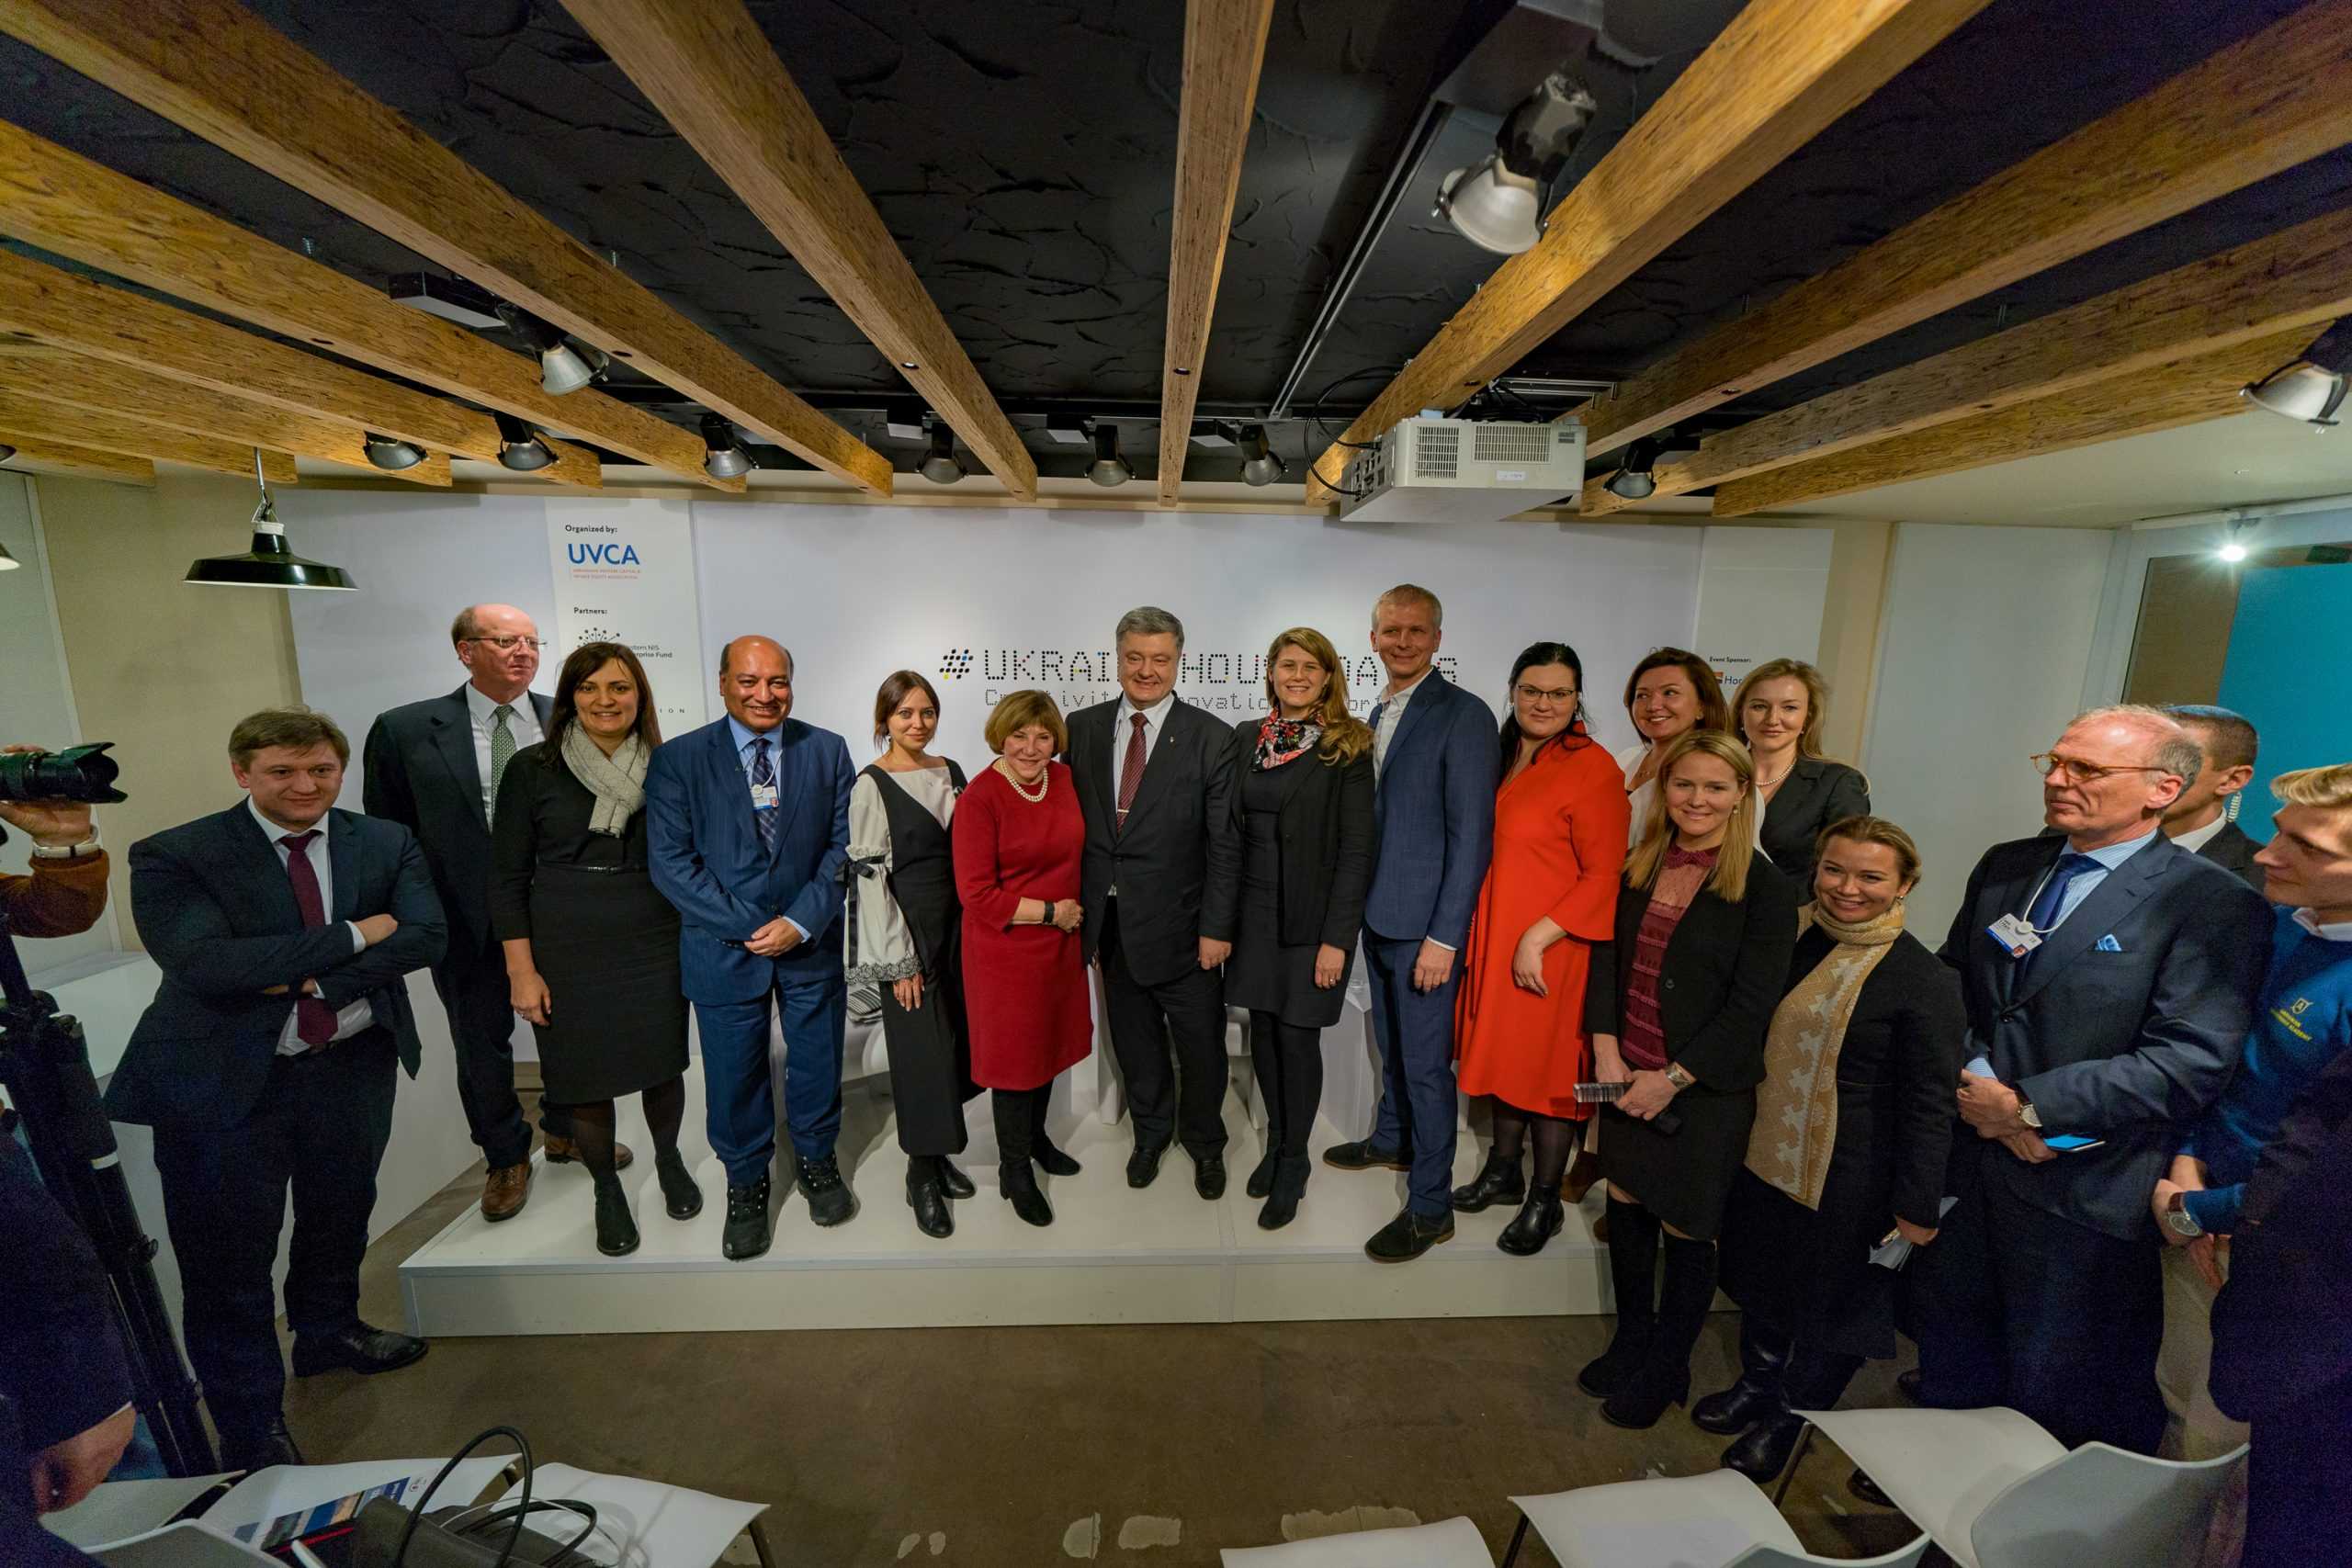 Ukraine House Davos 2018 picture